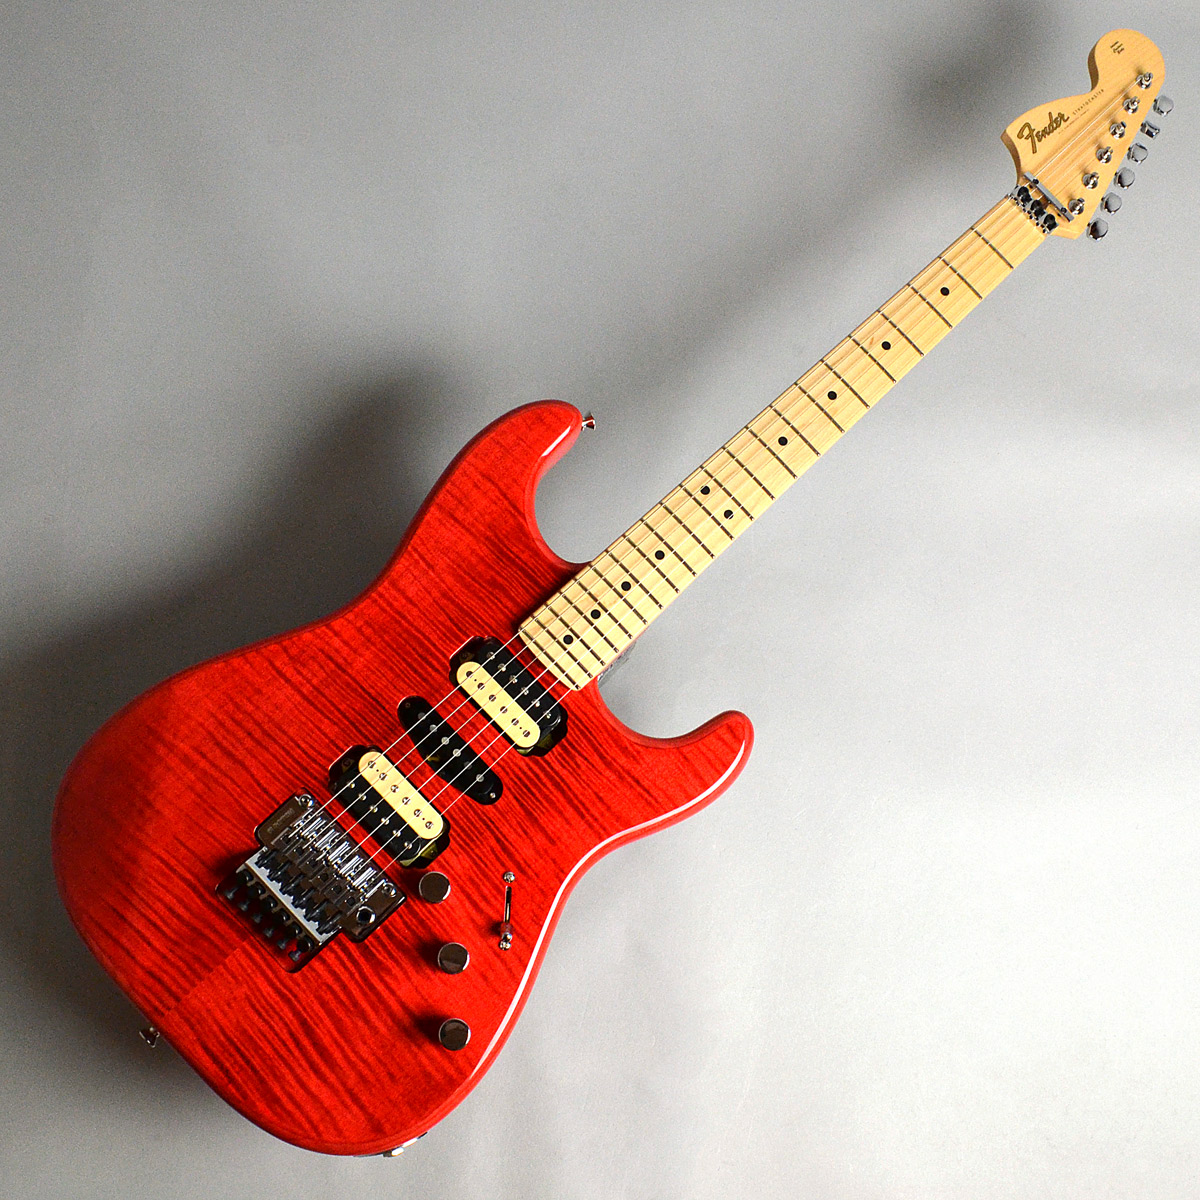 *Michiya Haruhata Stratocaster Trans Pink |*ブランド|Fender| |*型番|Michiya Haruhata Stratocaster Trans Pink| |*販売価格|[!￥178,200(税込)!]| [https://www.digimart […]